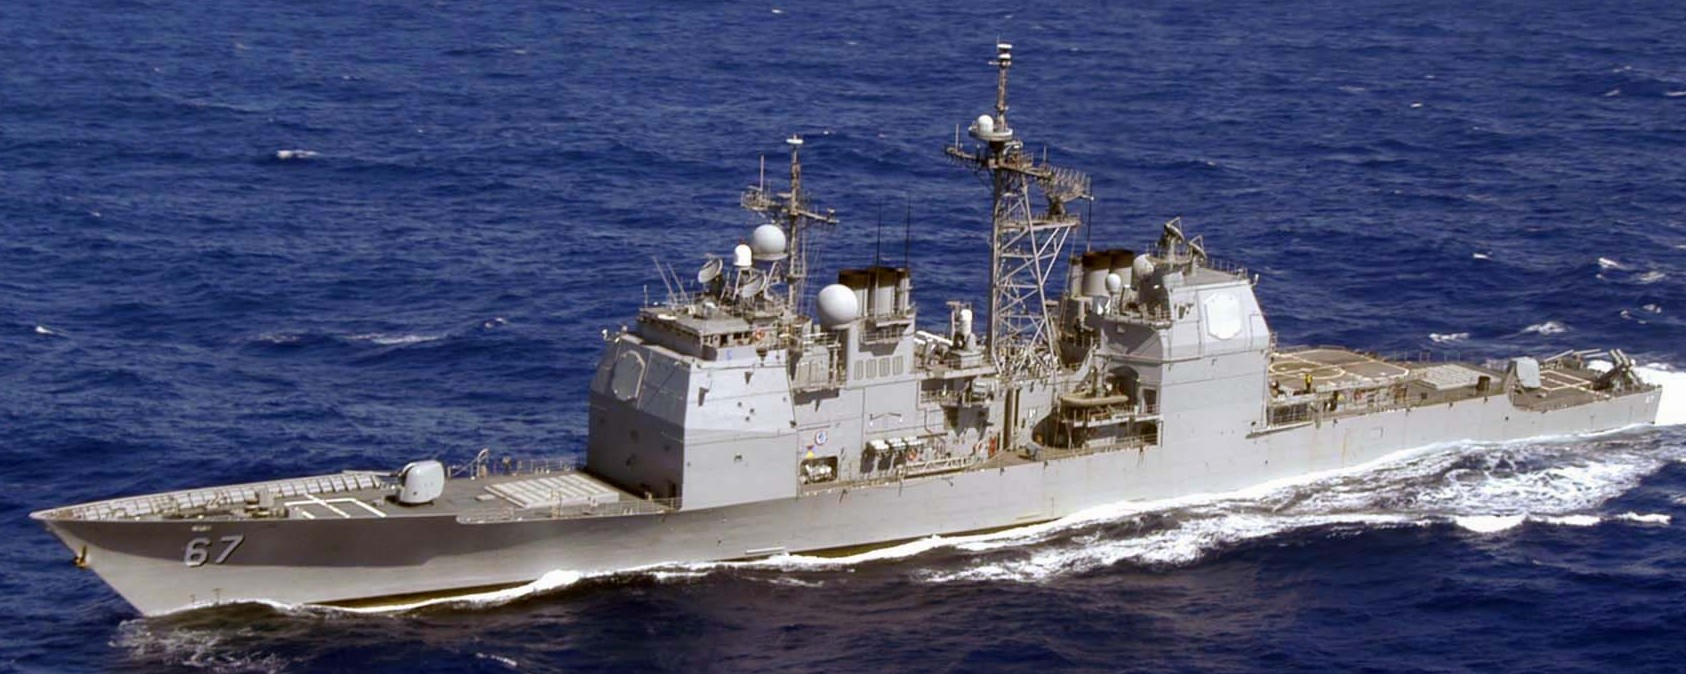 cg-67 uss shiloh ticonderoga class guided missile cruiser aegis us navy 08